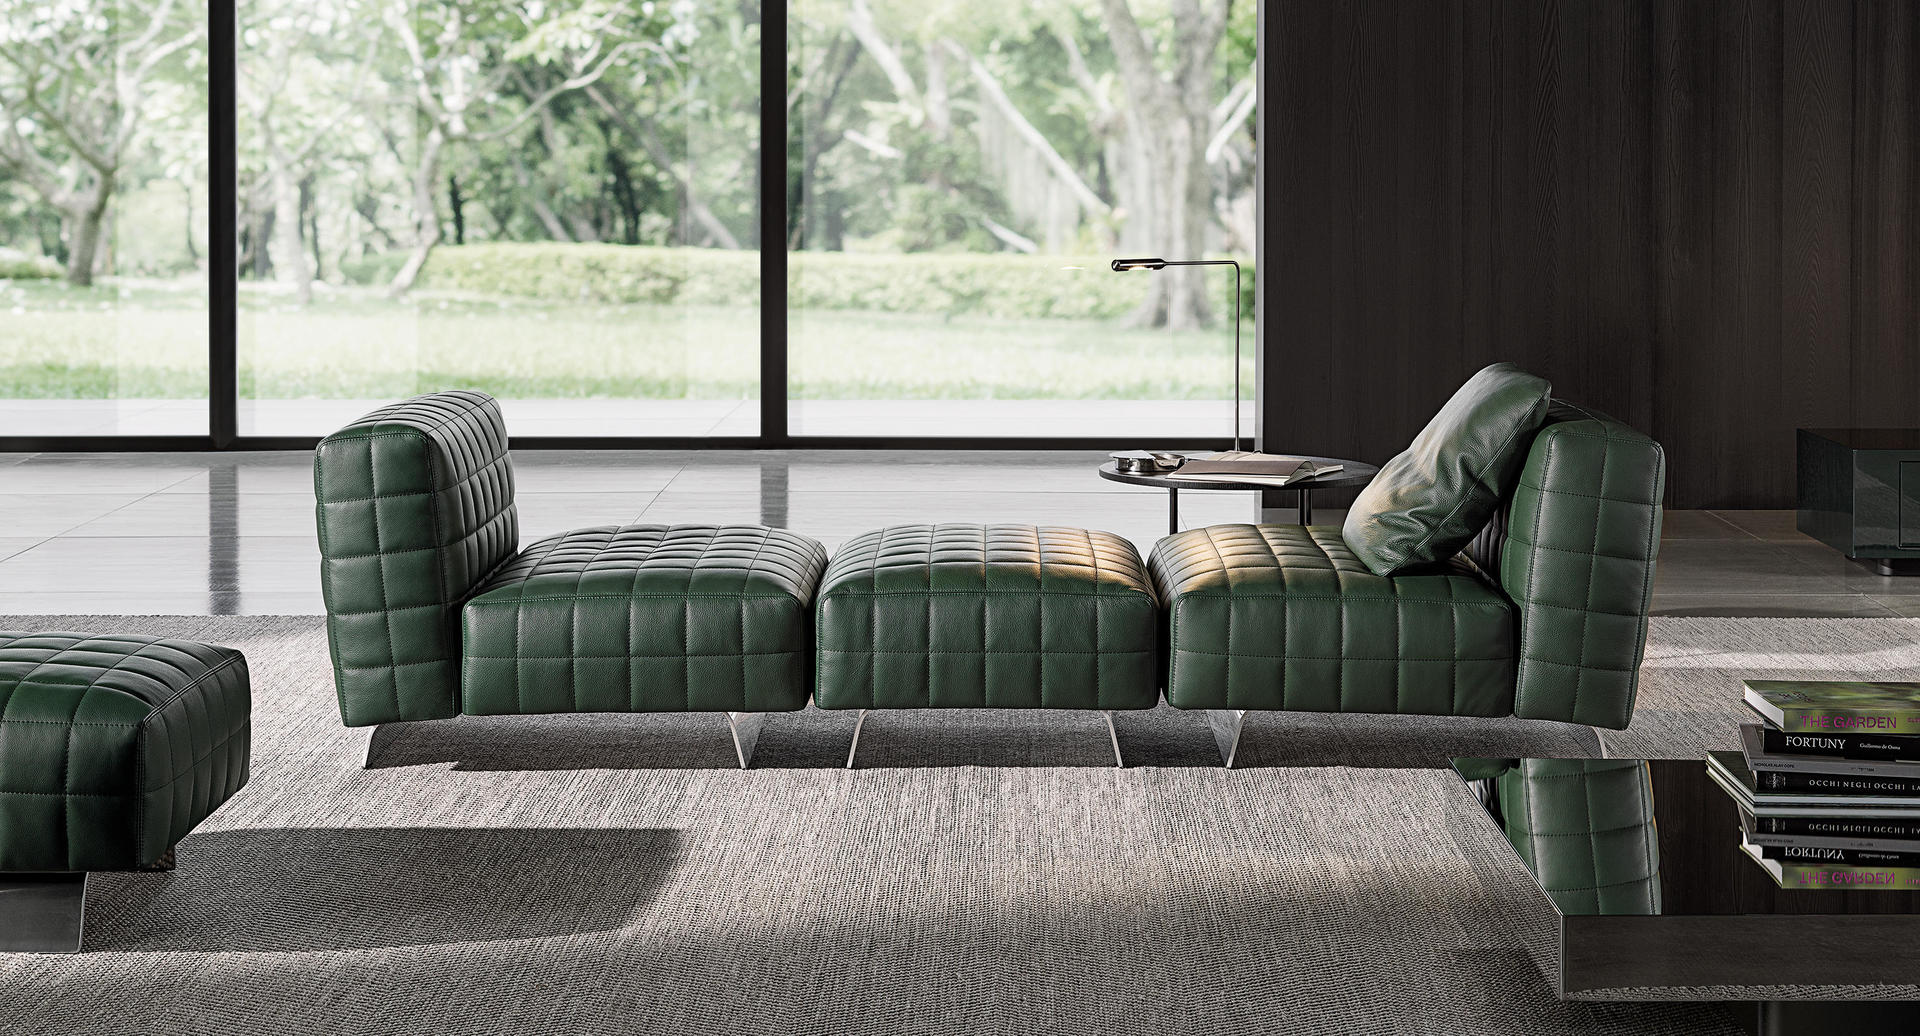 HORA Barneveld Minotti Twiggy bank modulaire sofa design meubelen designmeubelen 5.jpg